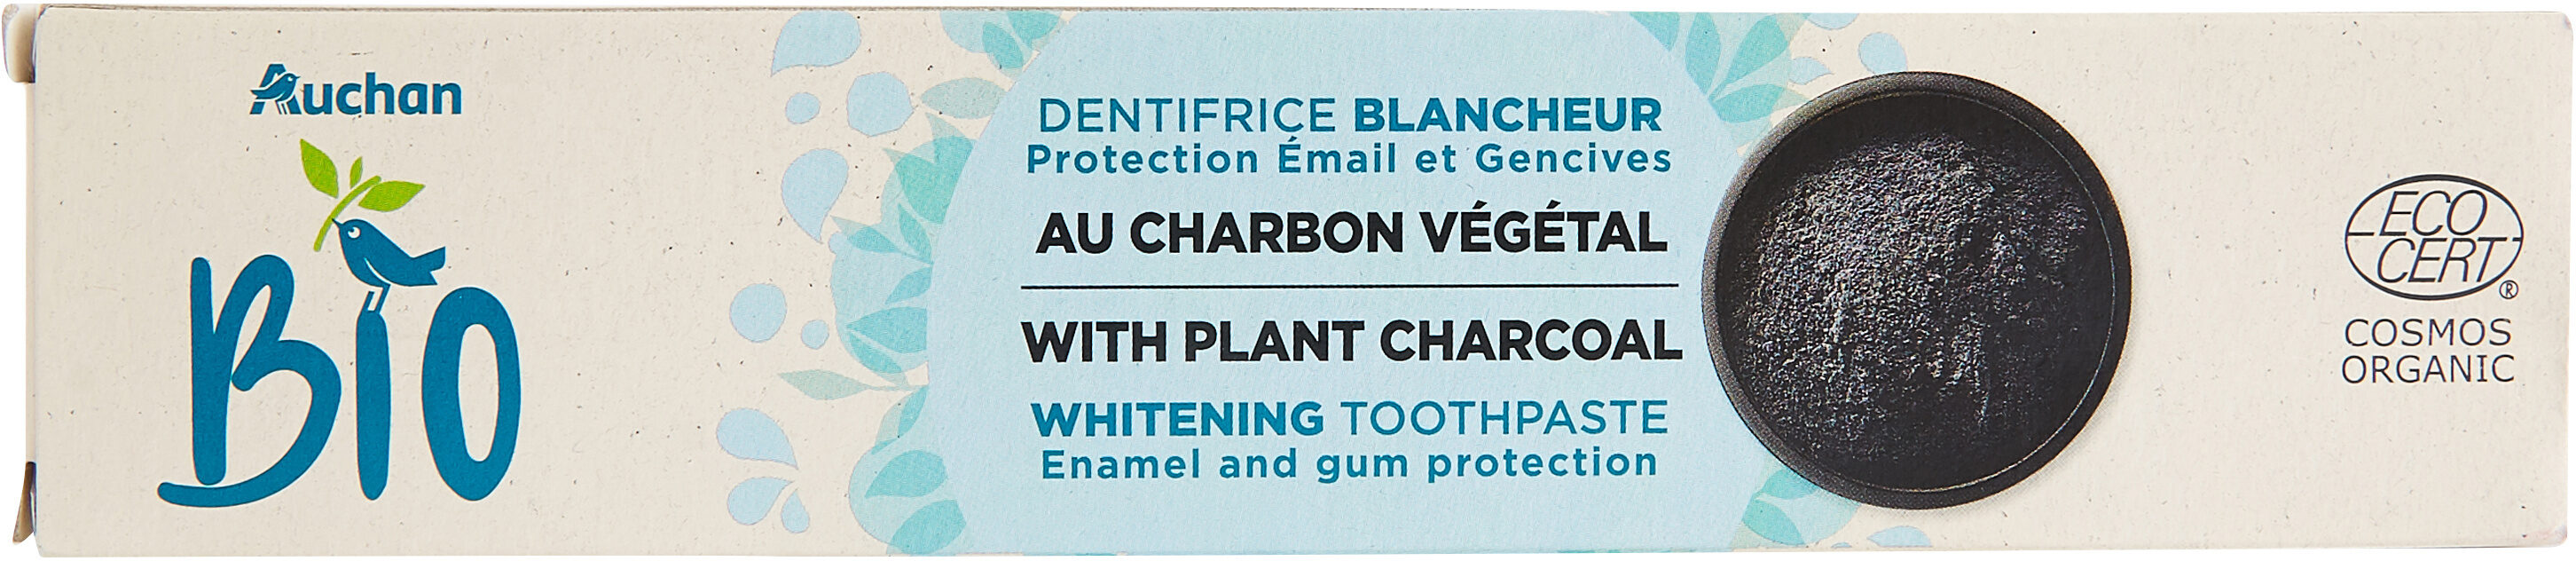 Dentifrice blancheur au charbon vegetal - Produkto - fr